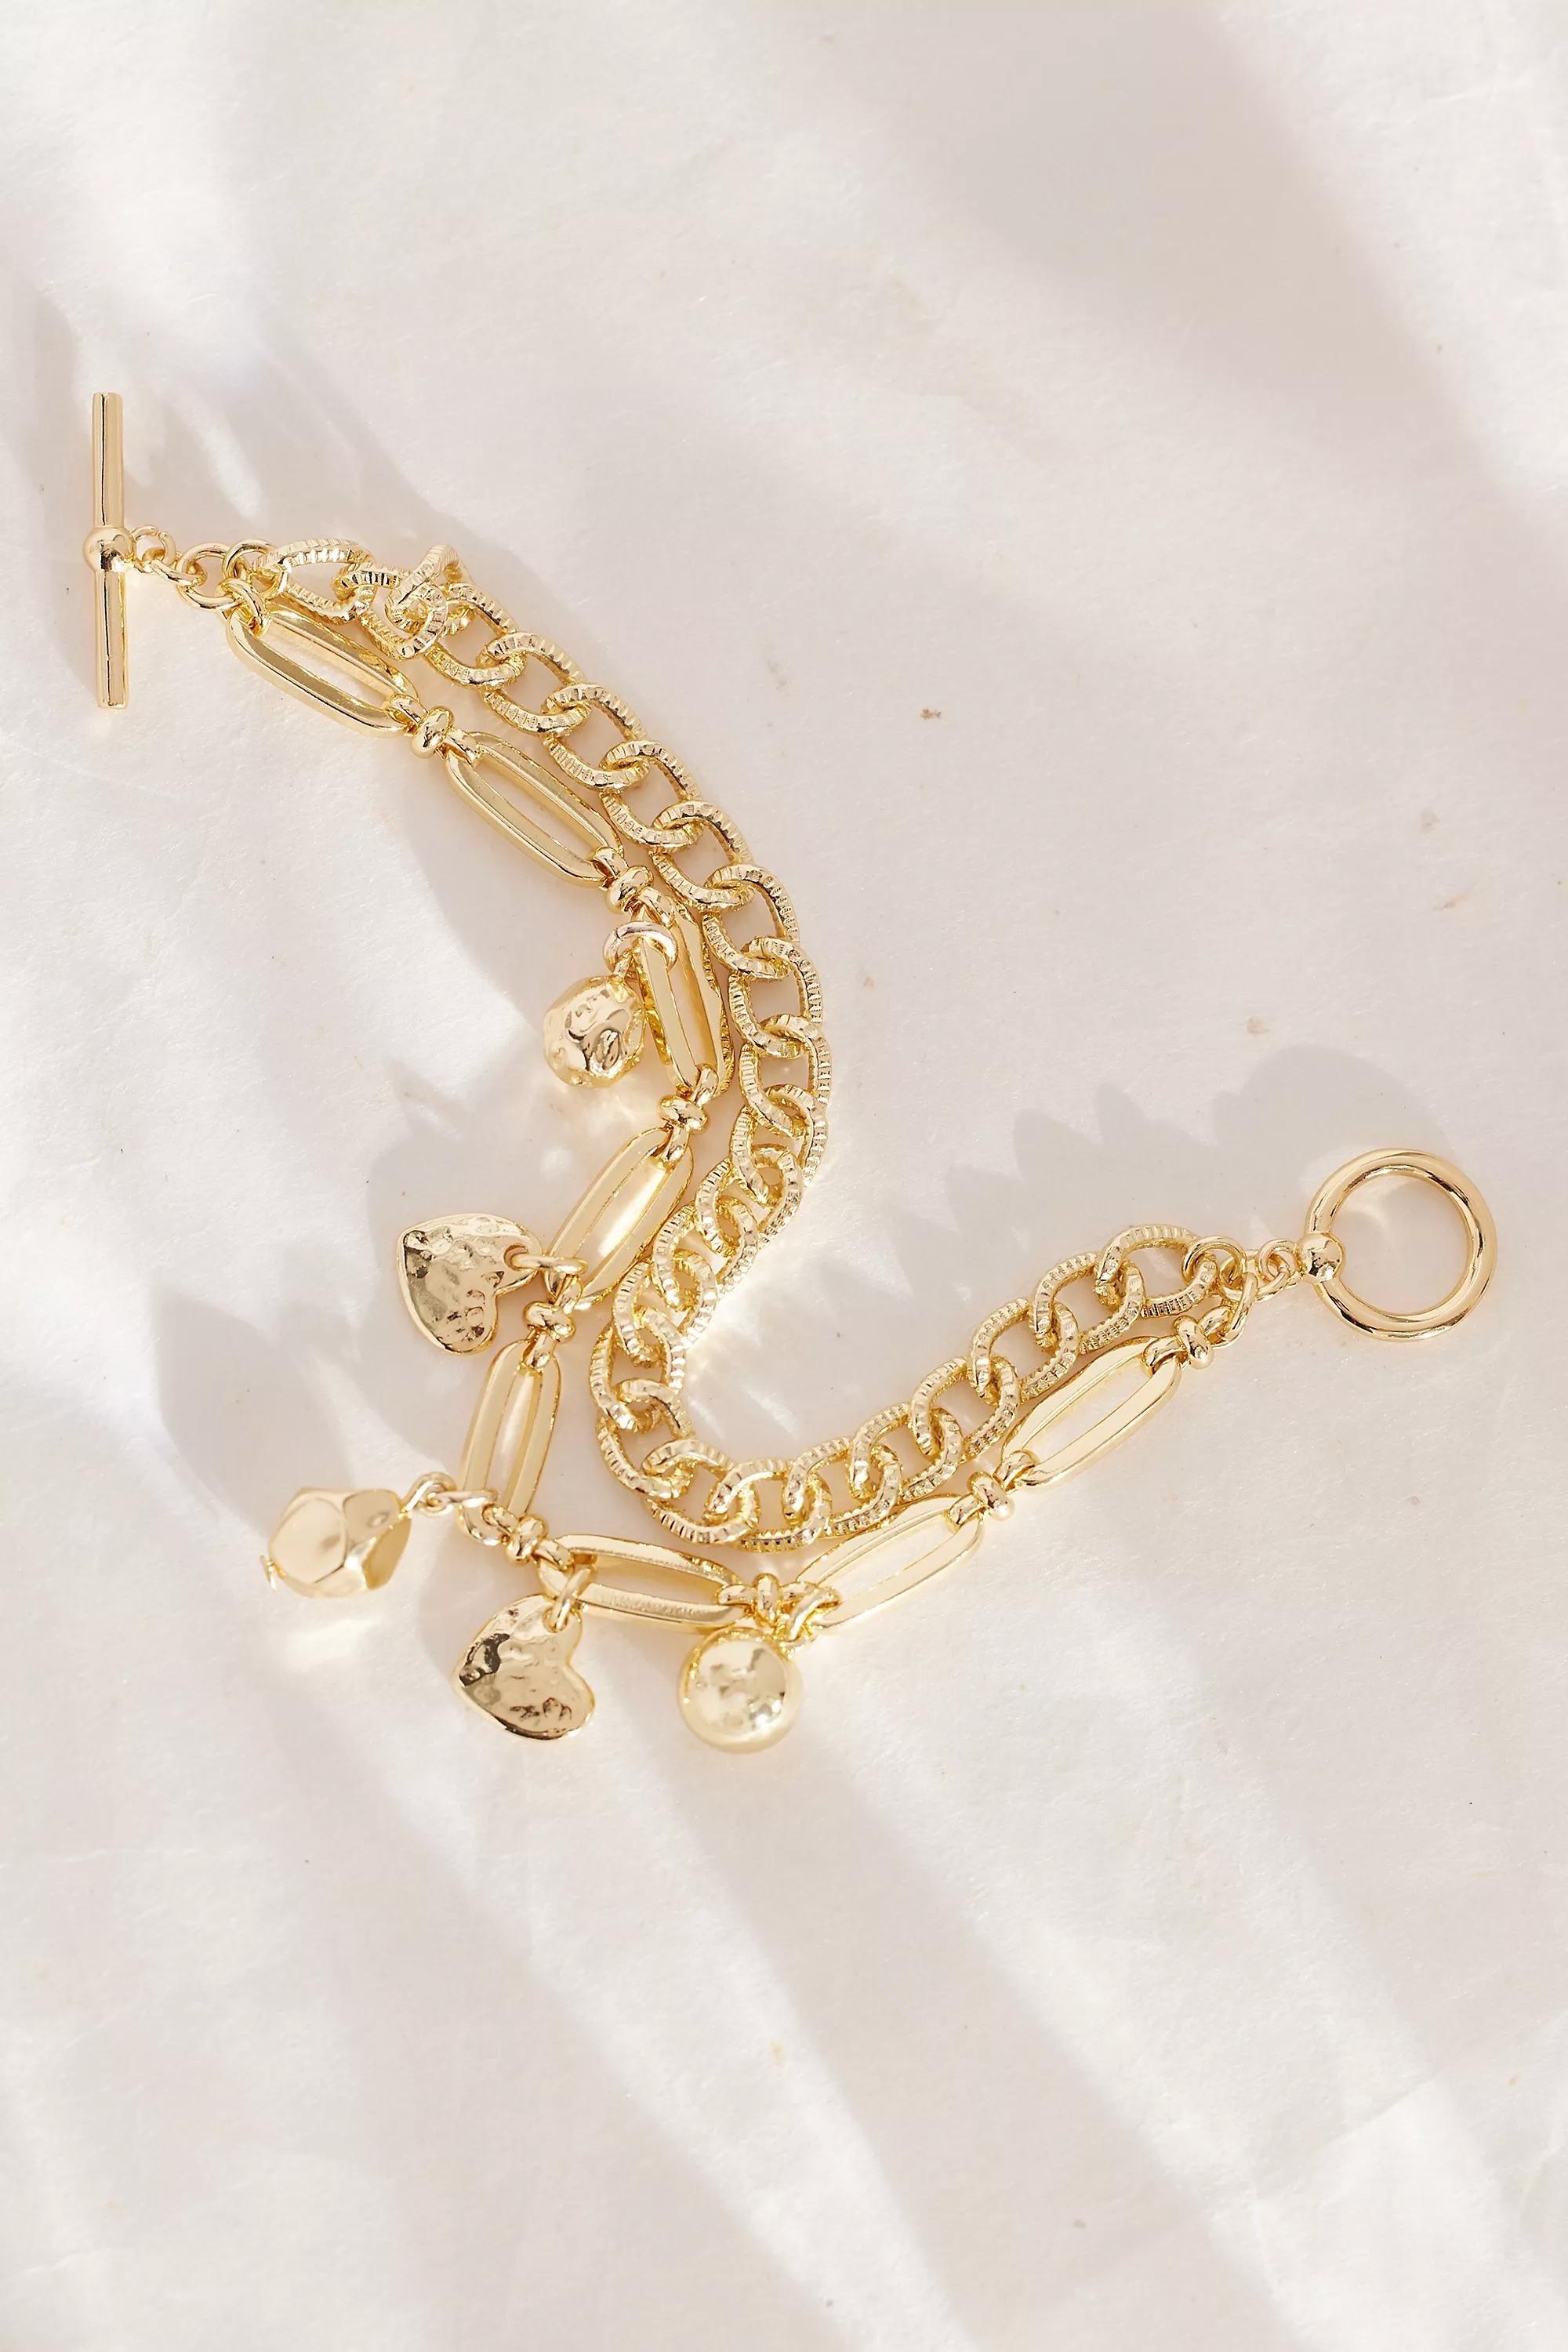 Anthropologie - Uk Toggle Charm Bracelet, Gold